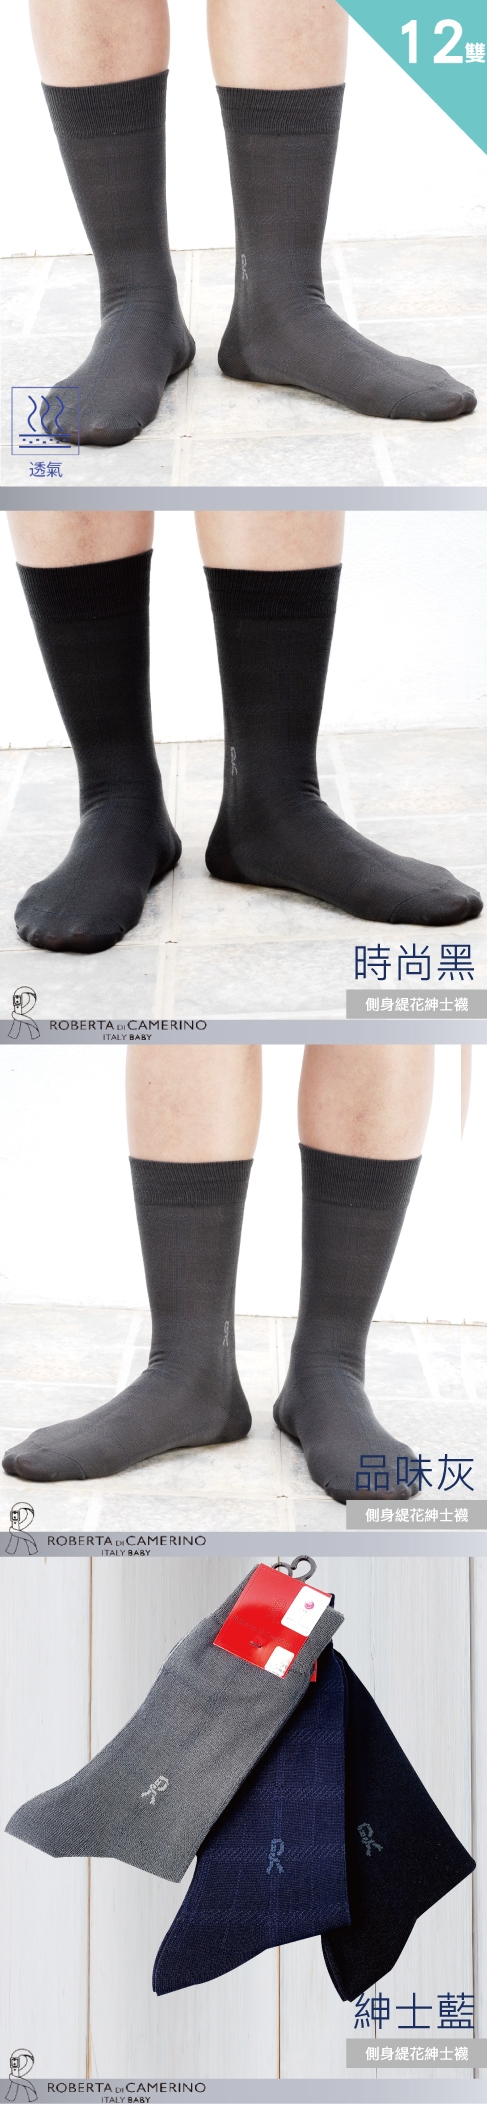 ROBERTA 諾貝達刺繡紳士襪NO.4005-12雙入